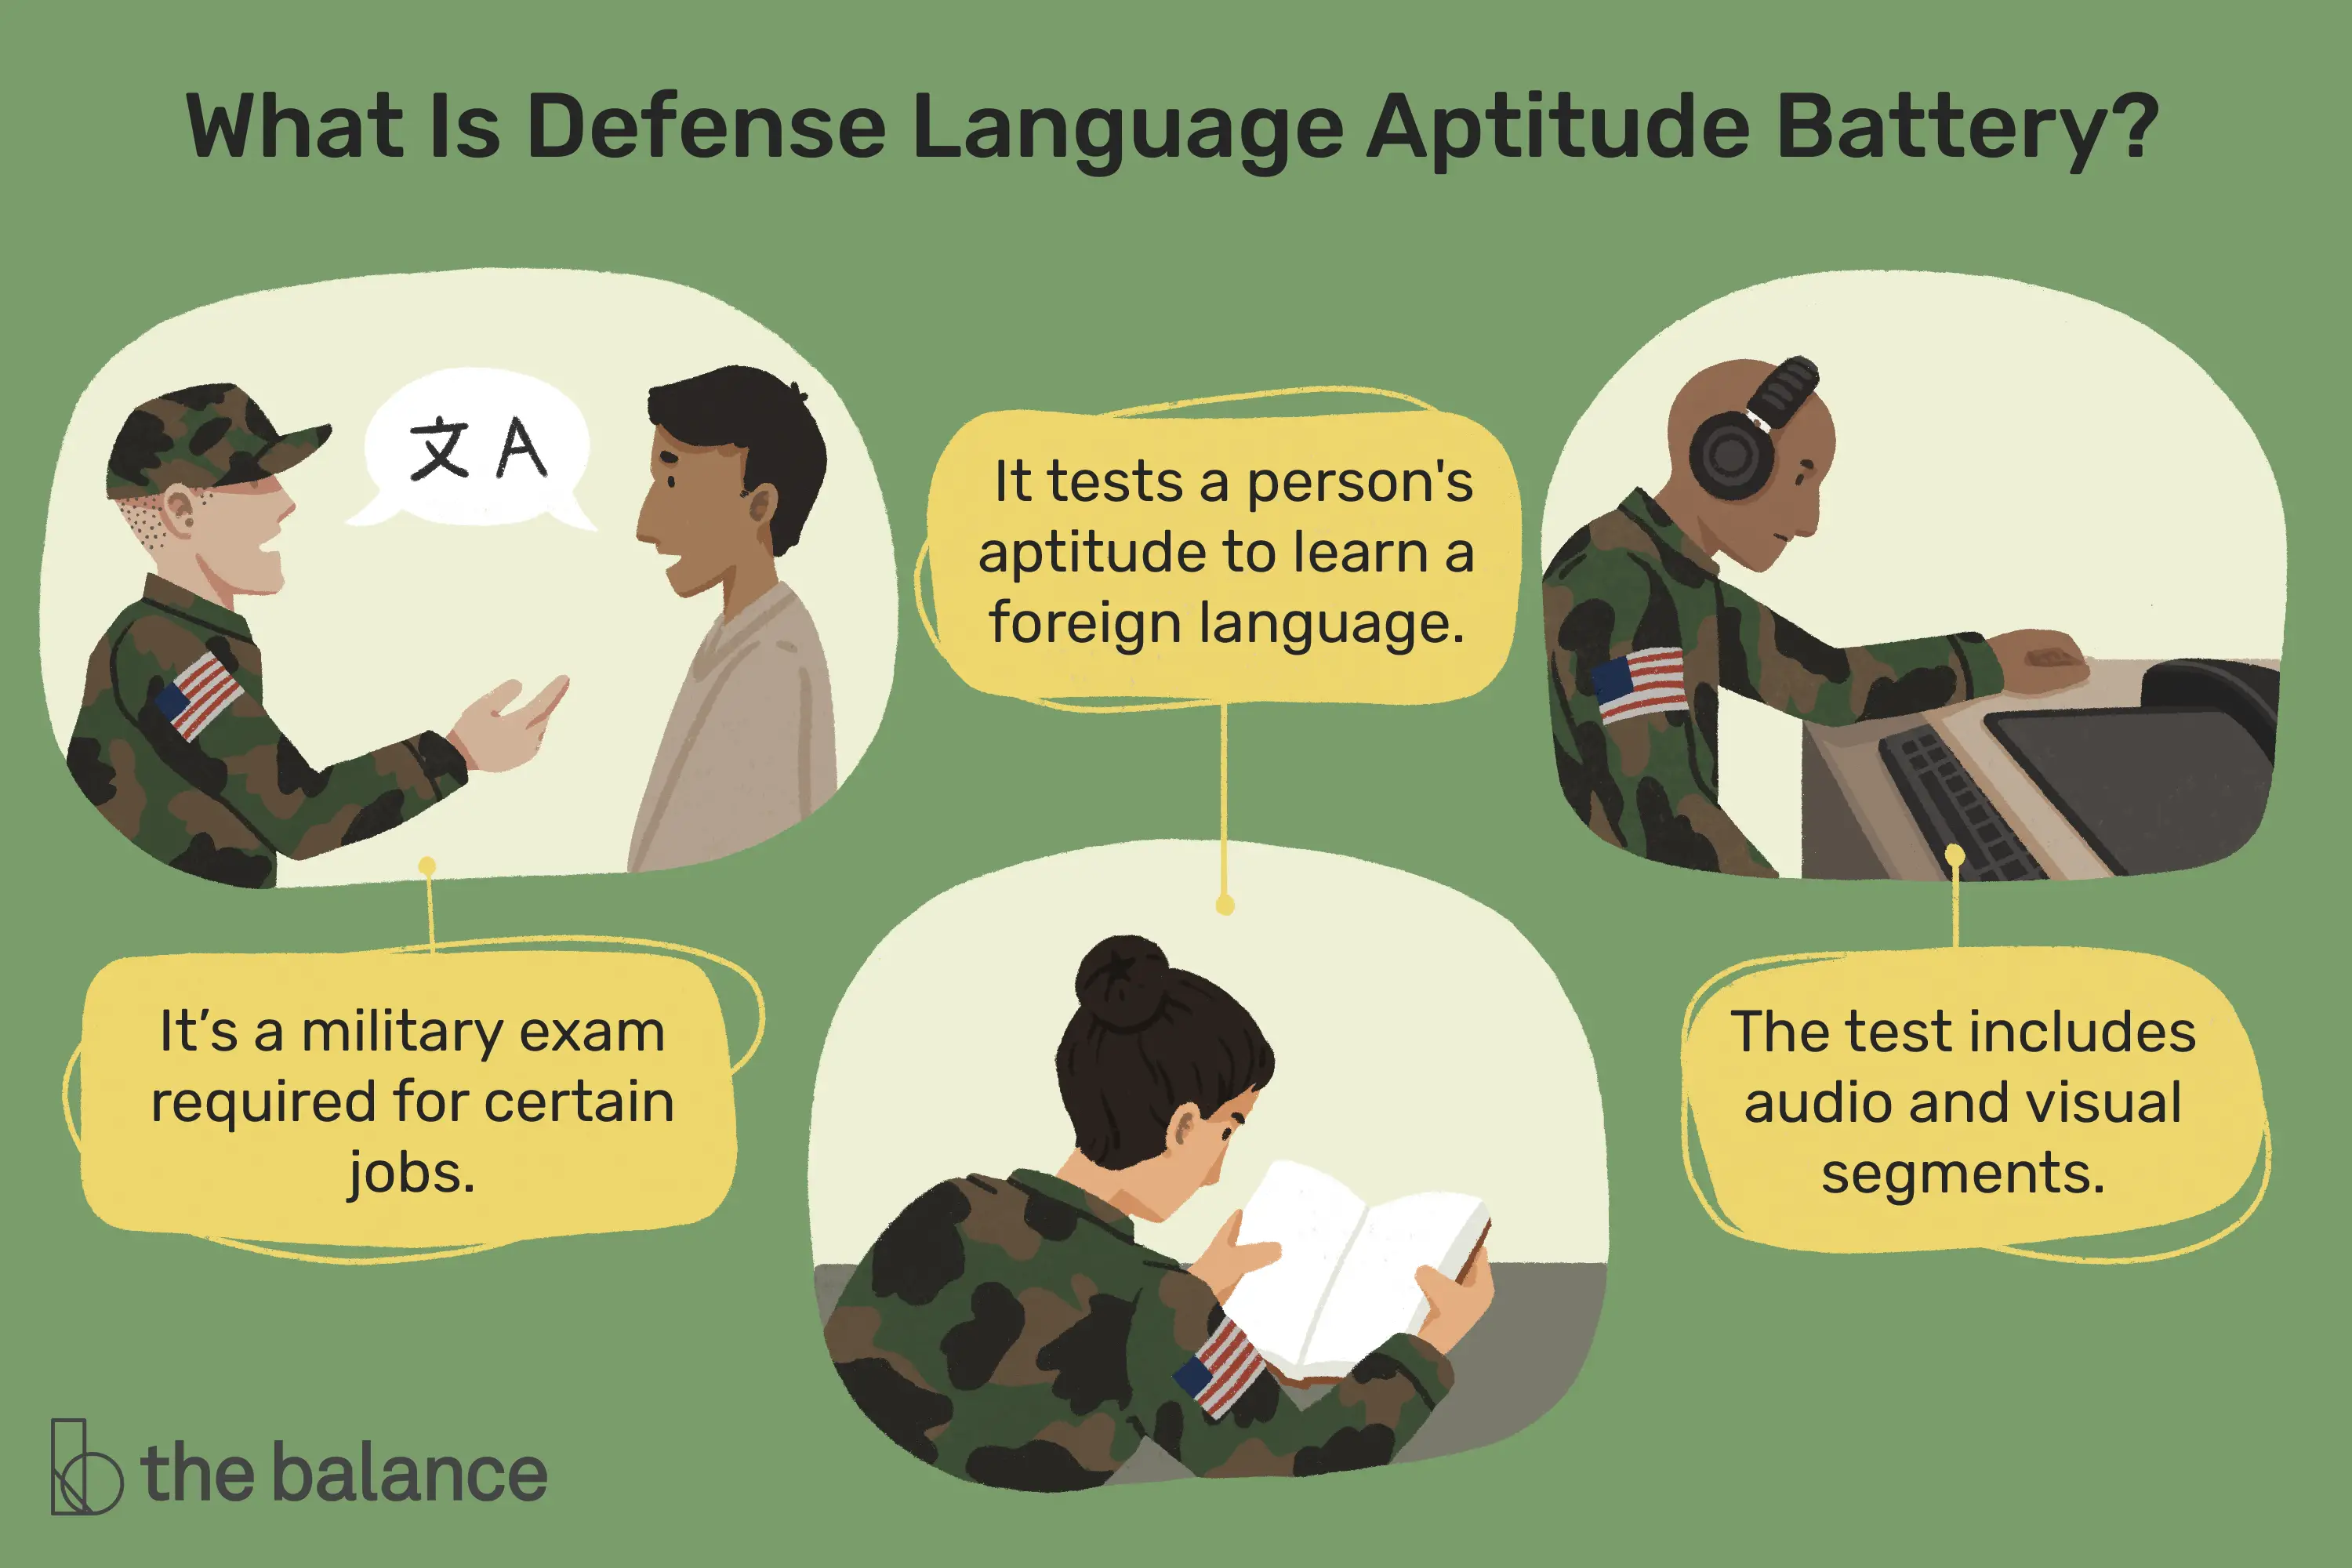 The Defense Language Aptitude Battery Test